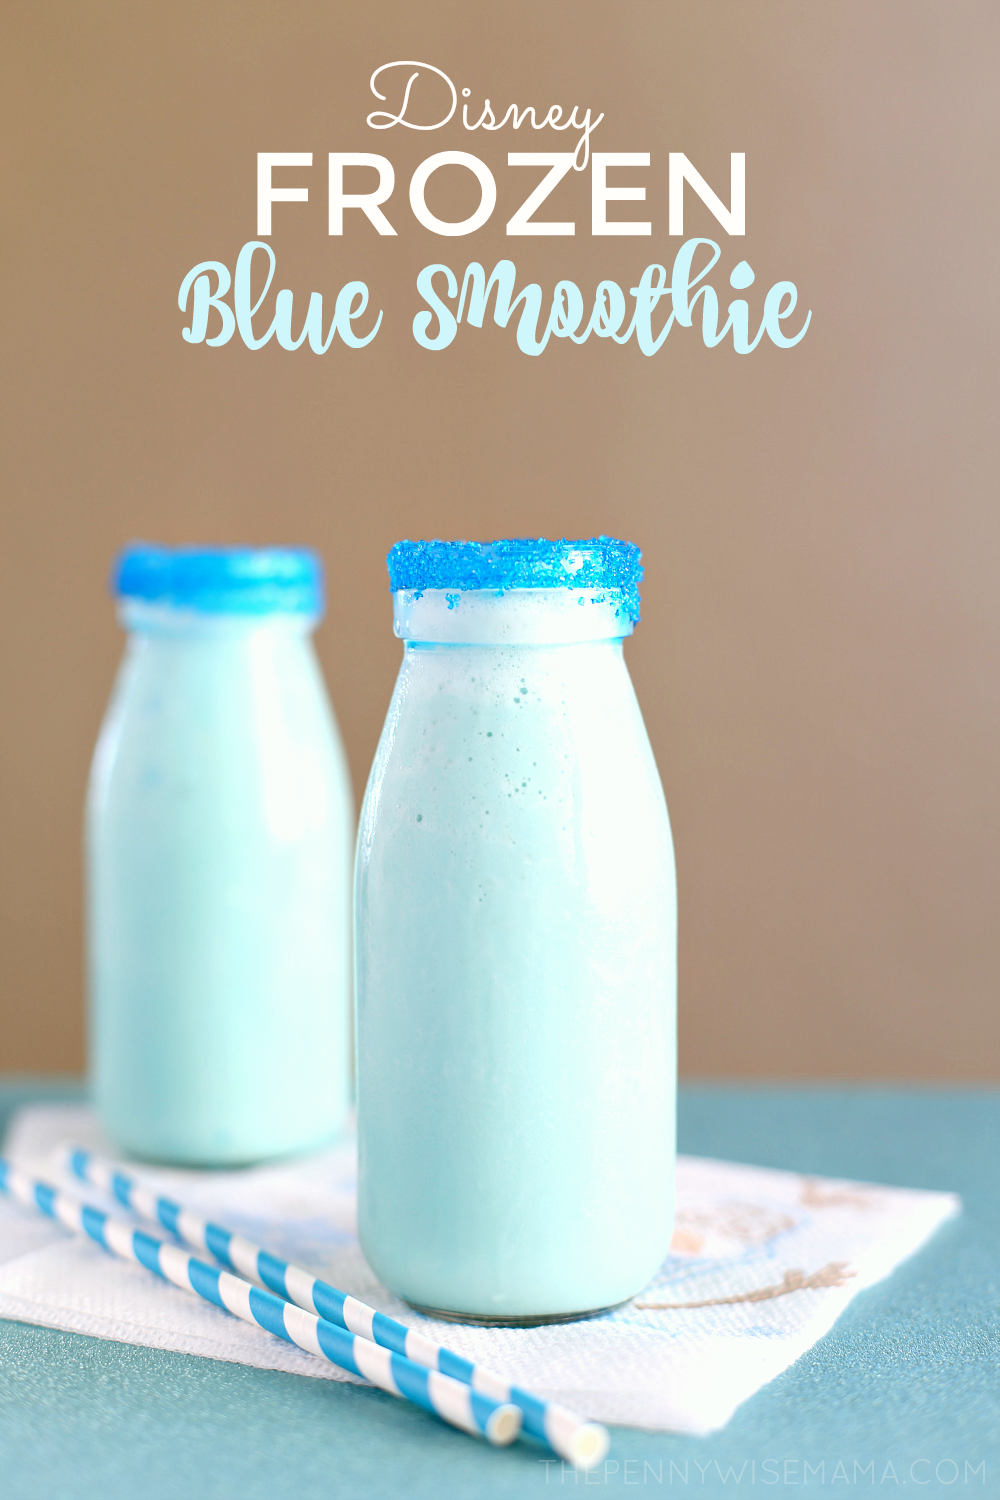 Disney FROZEN Blue Smoothie - fun & easy recipe!